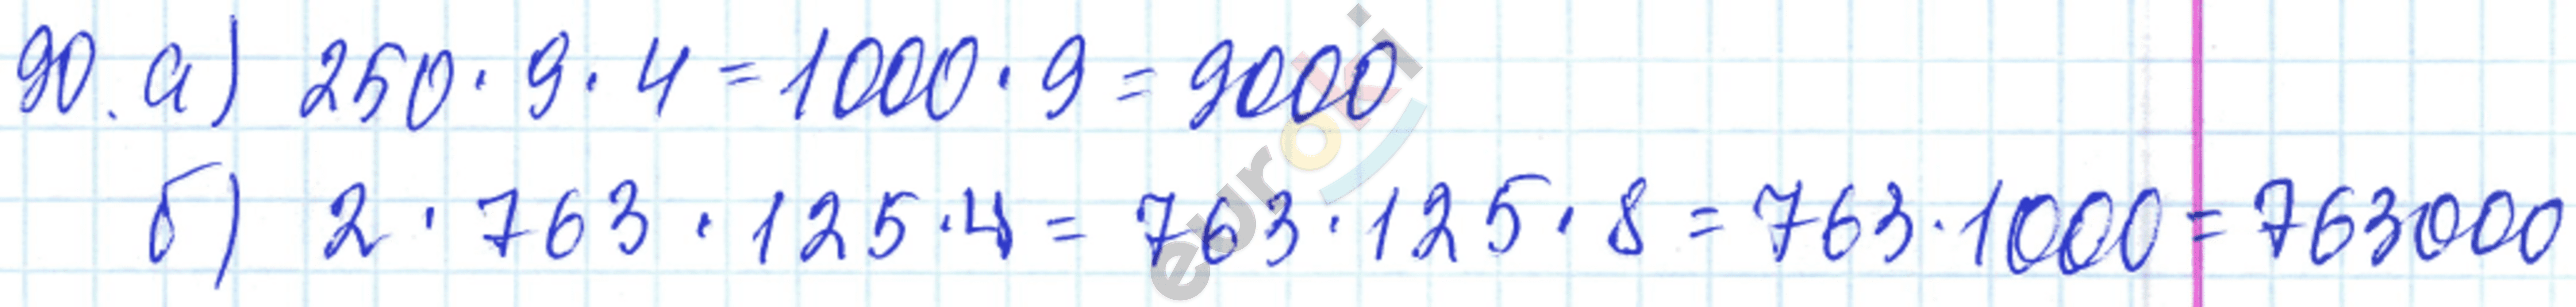 Математика 5 класс страница 170. Математика 5 класс дидактические голубые. Гдз по матем 5 класс дидактический материал. Варианты с 90. Математика 5 класс упражнение 90 на странице 199.